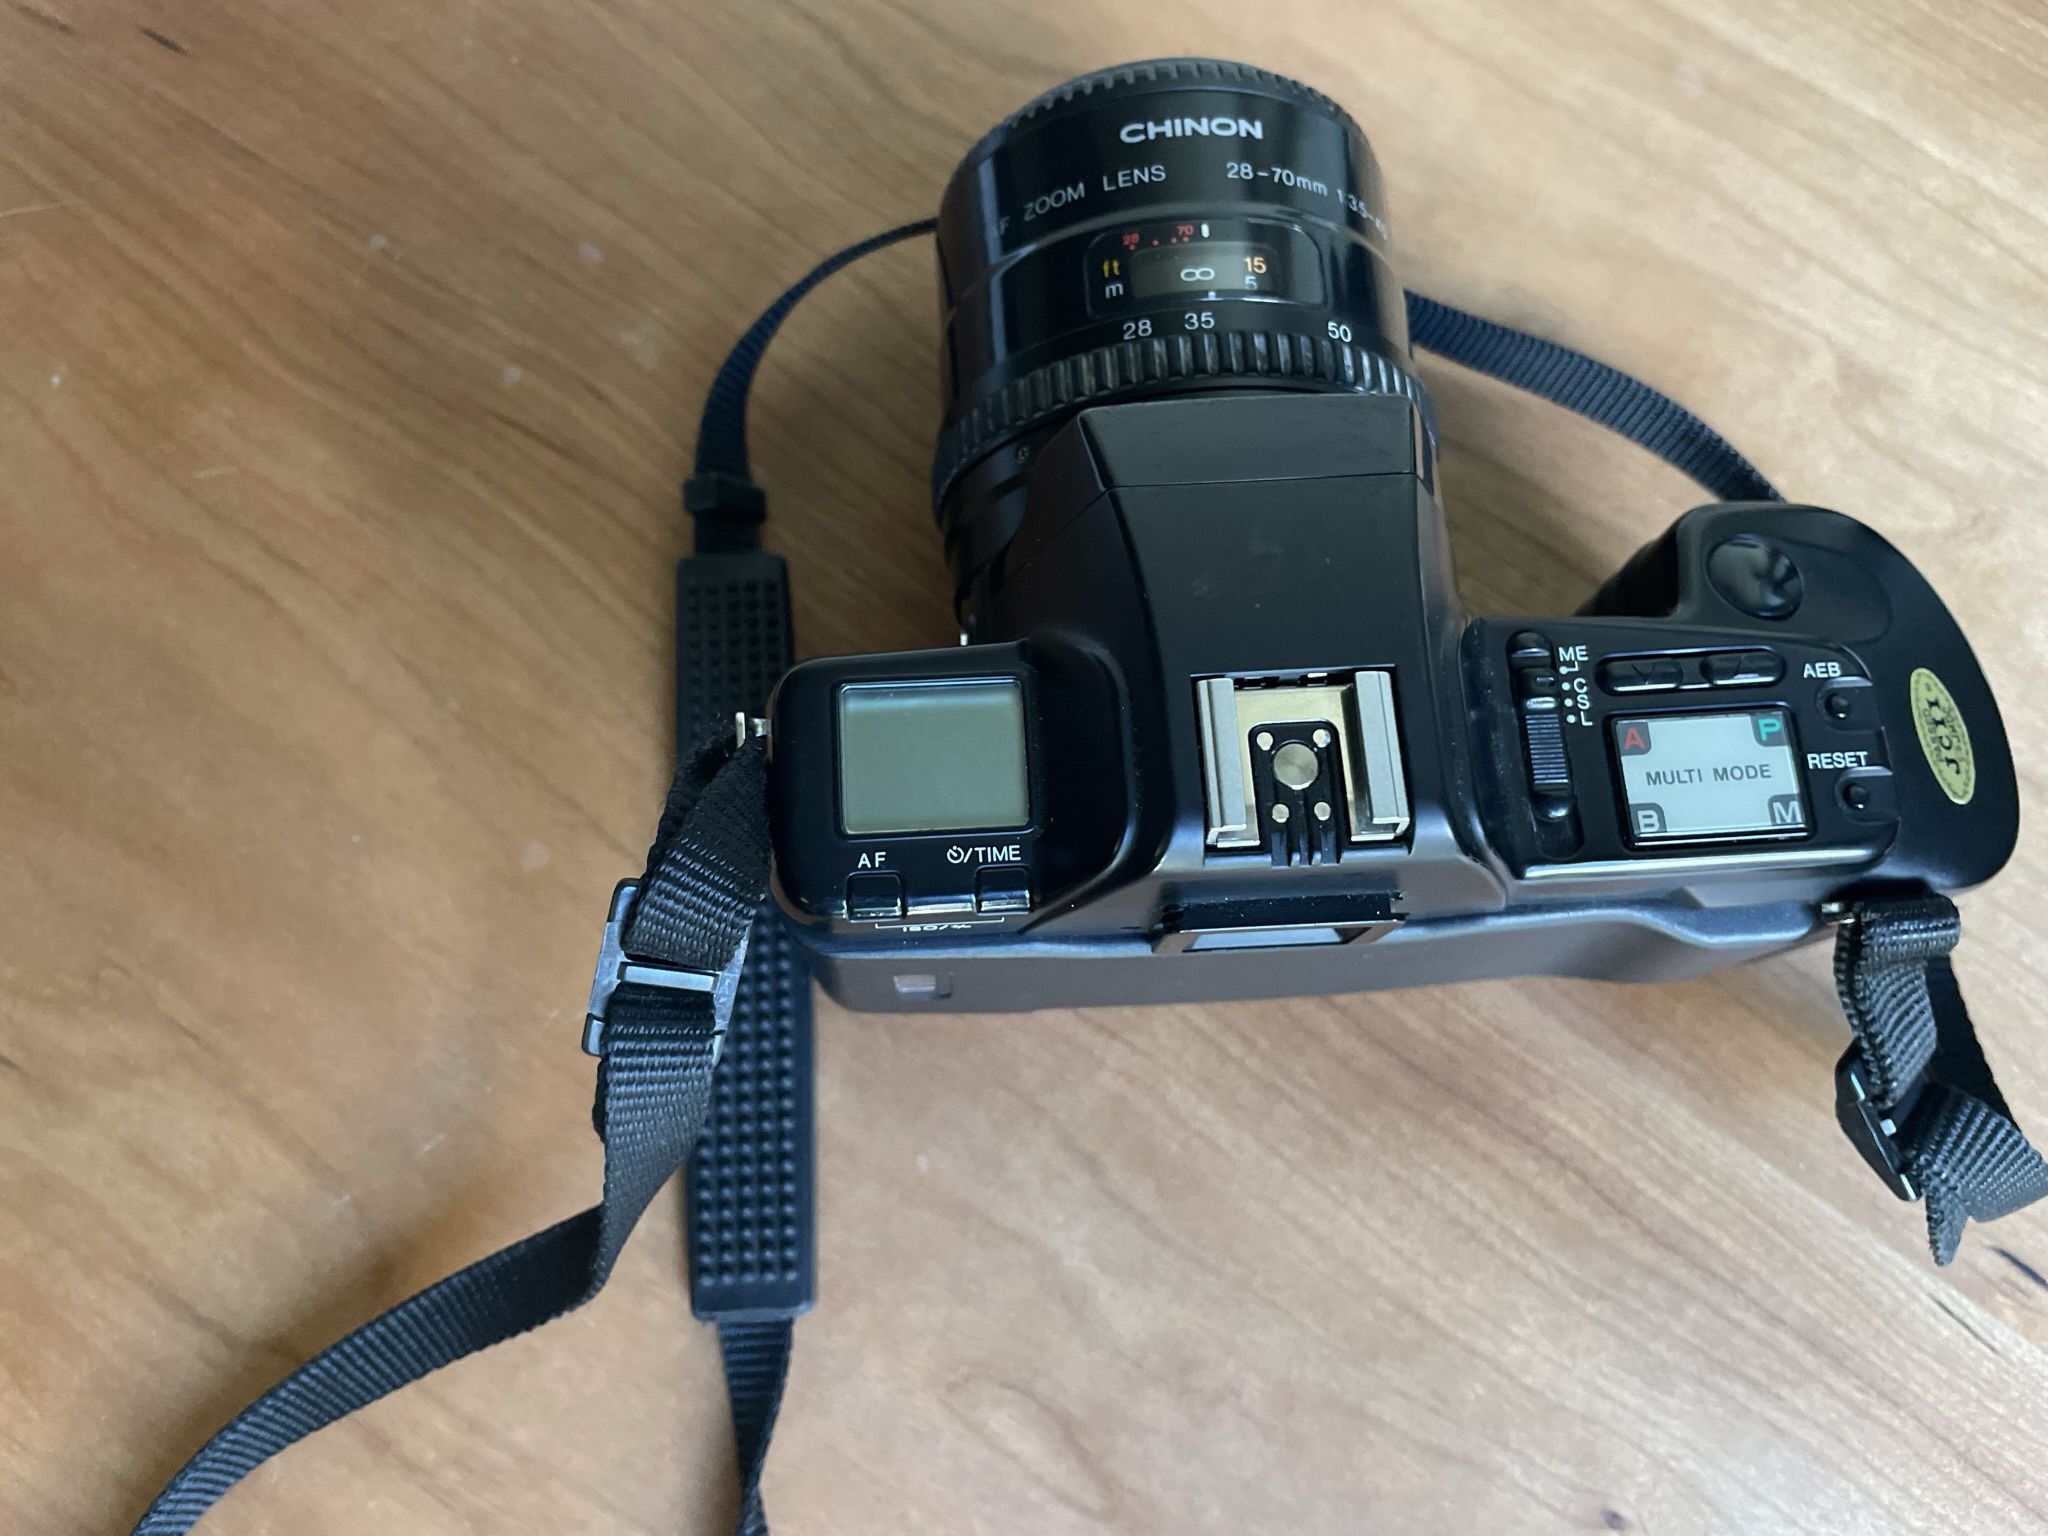 Camera and Lens